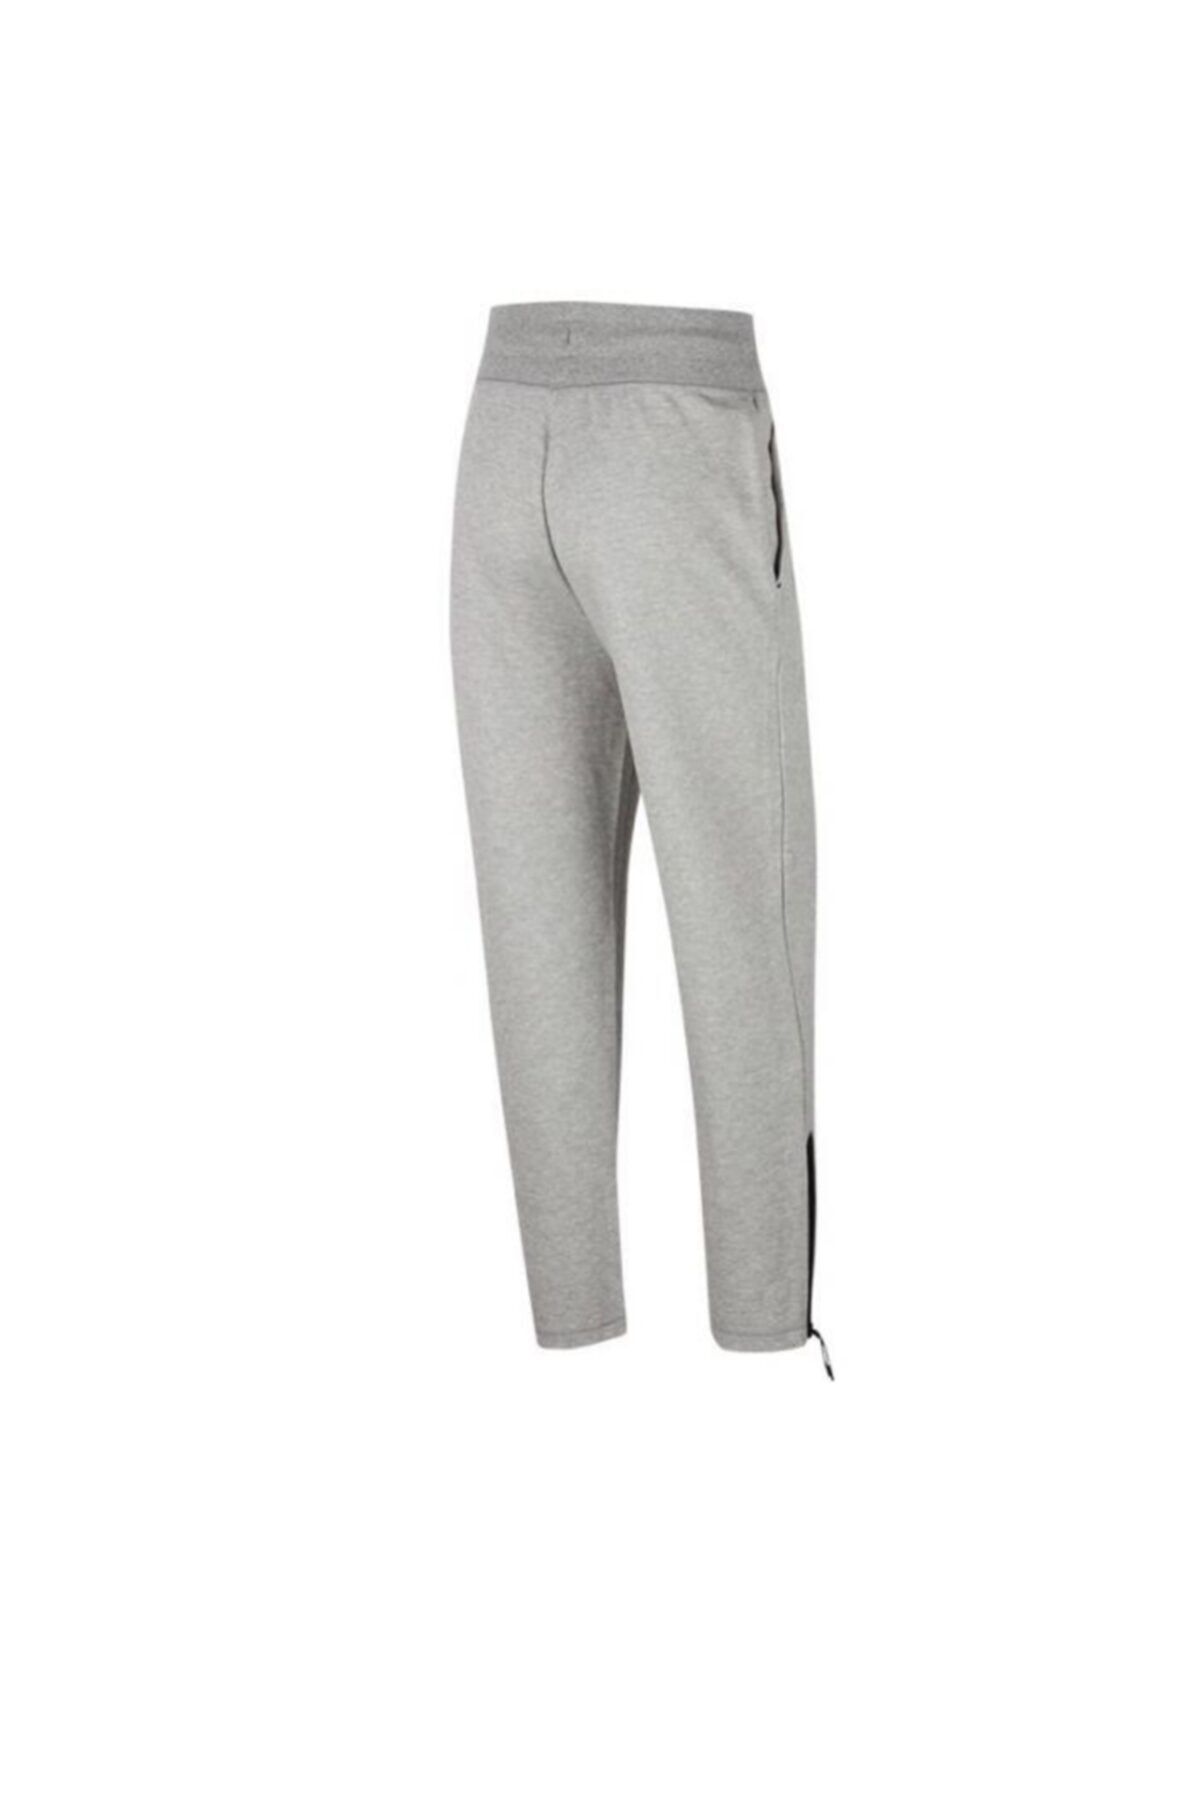 Nike Tech Fleece Gray Sweatpants-grey ModeSens Nike Women, 56% OFF